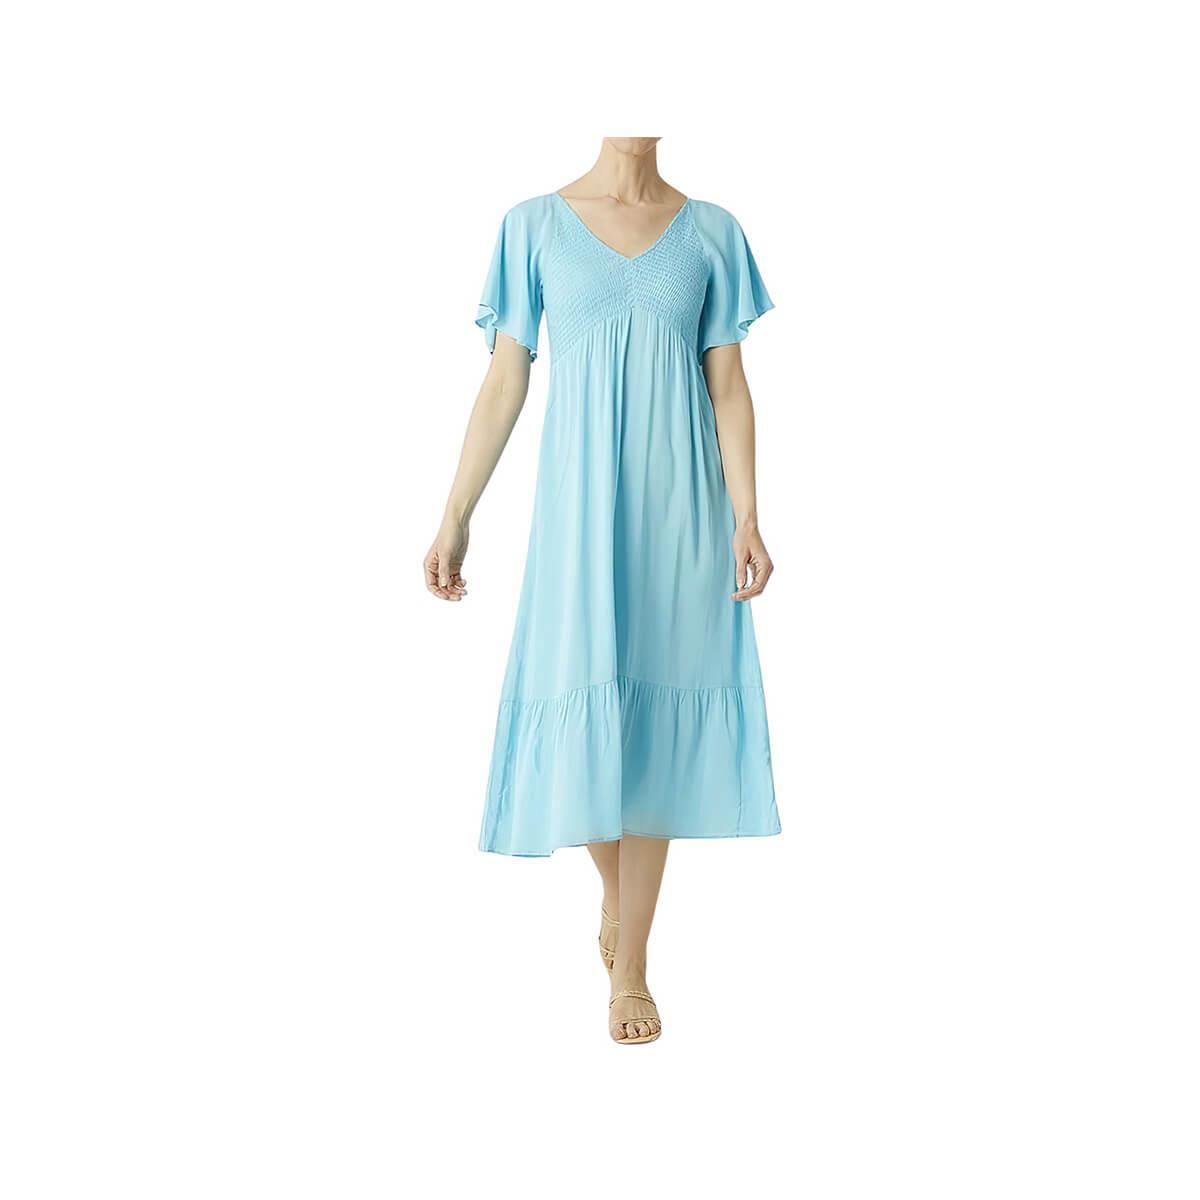  Women's Saltwater Smocked V Neck Dress